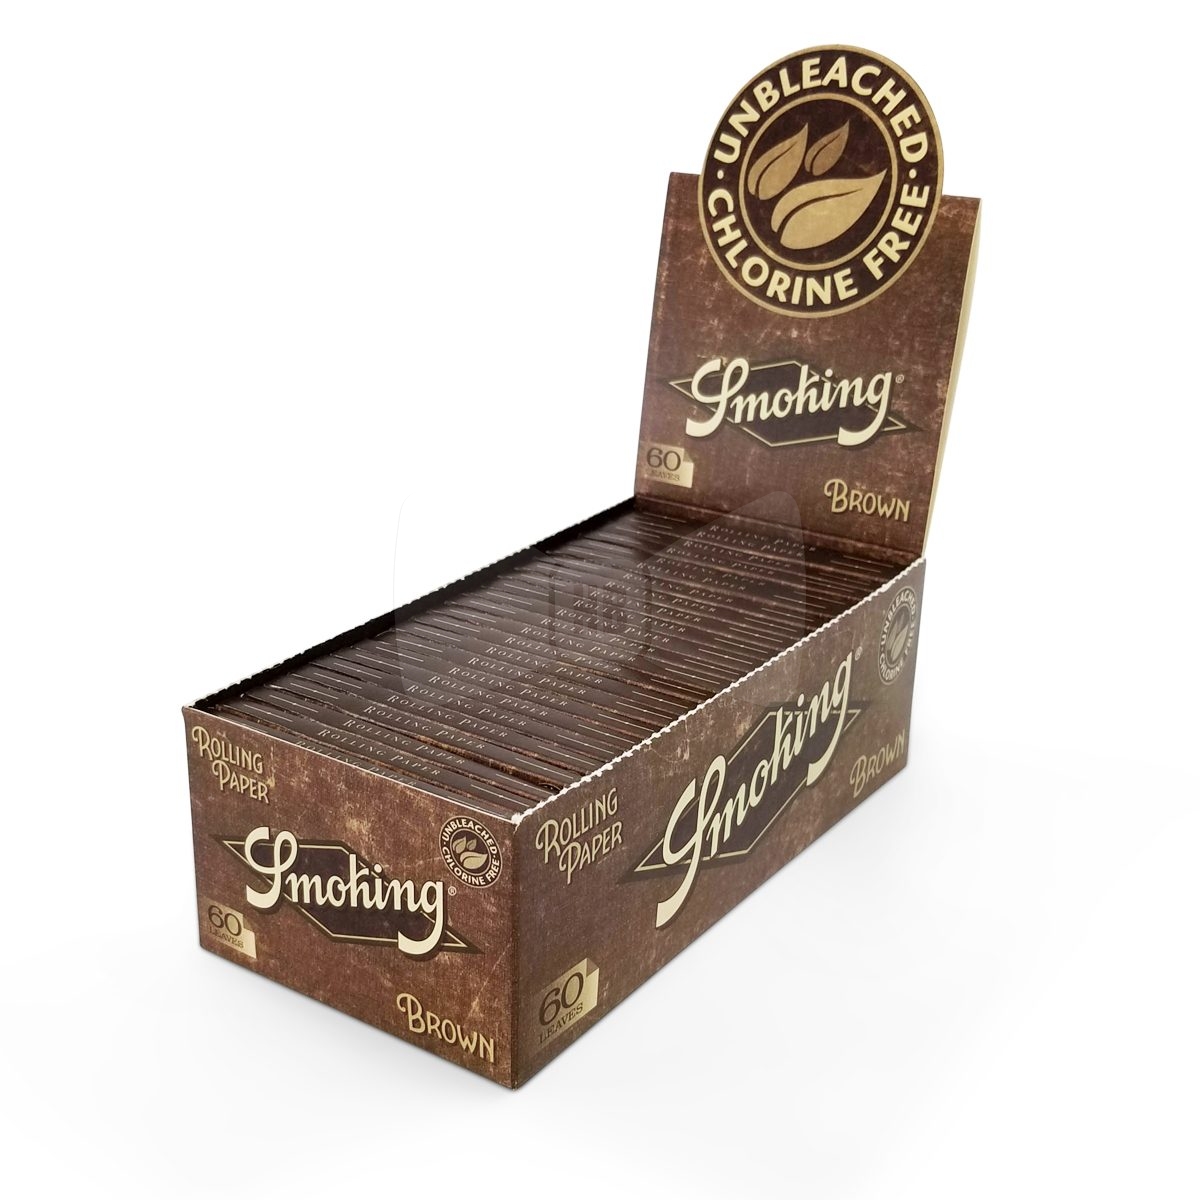 Smoking Brown Single Wide Full Box (50 Packs)